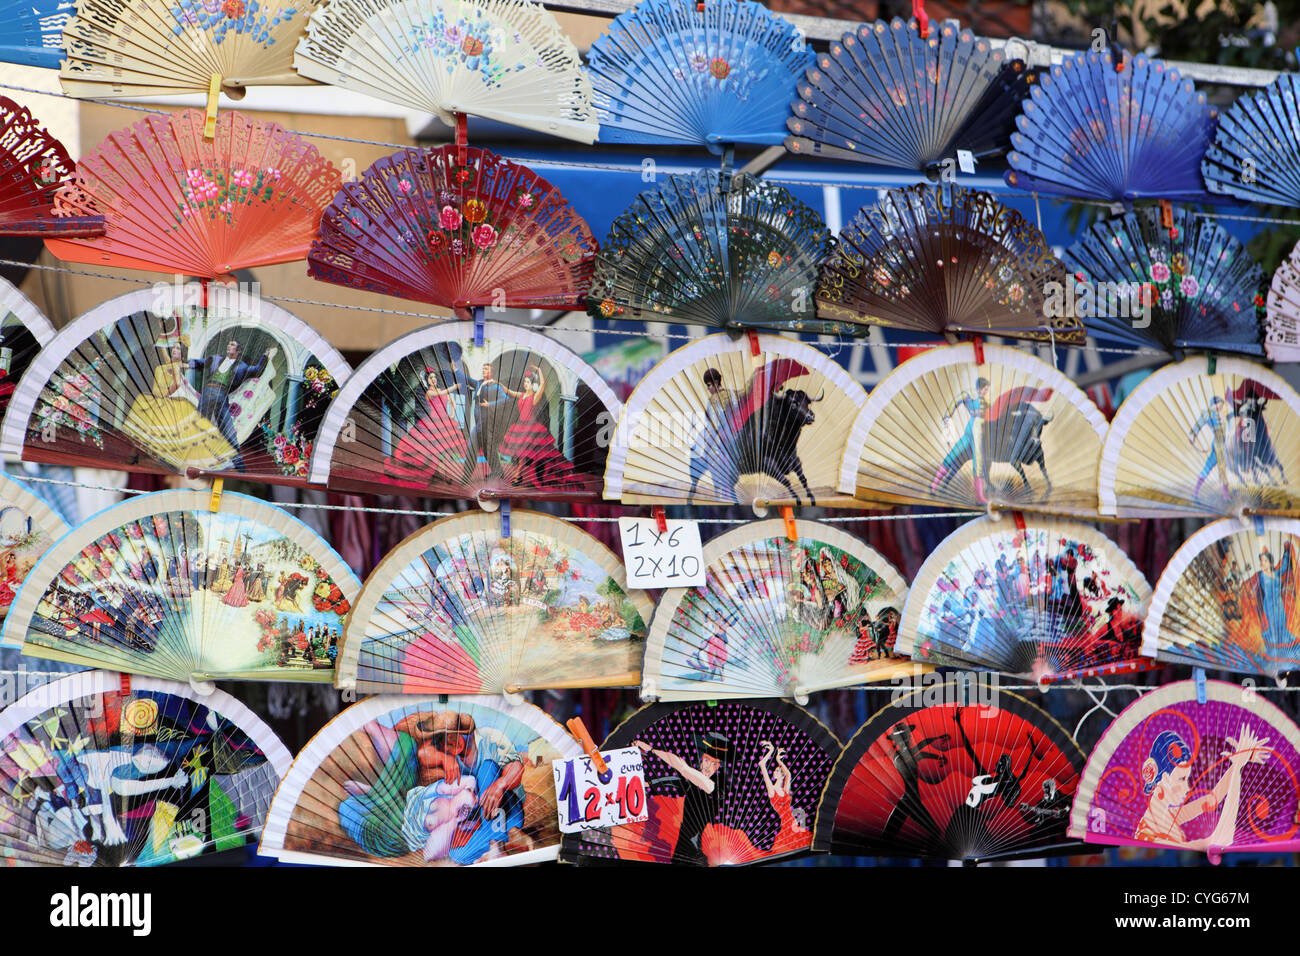 Selection of souvenir Spanish fans for sale, street market pavement stall, El Rastro, Madrid, Spain. Stock Photo